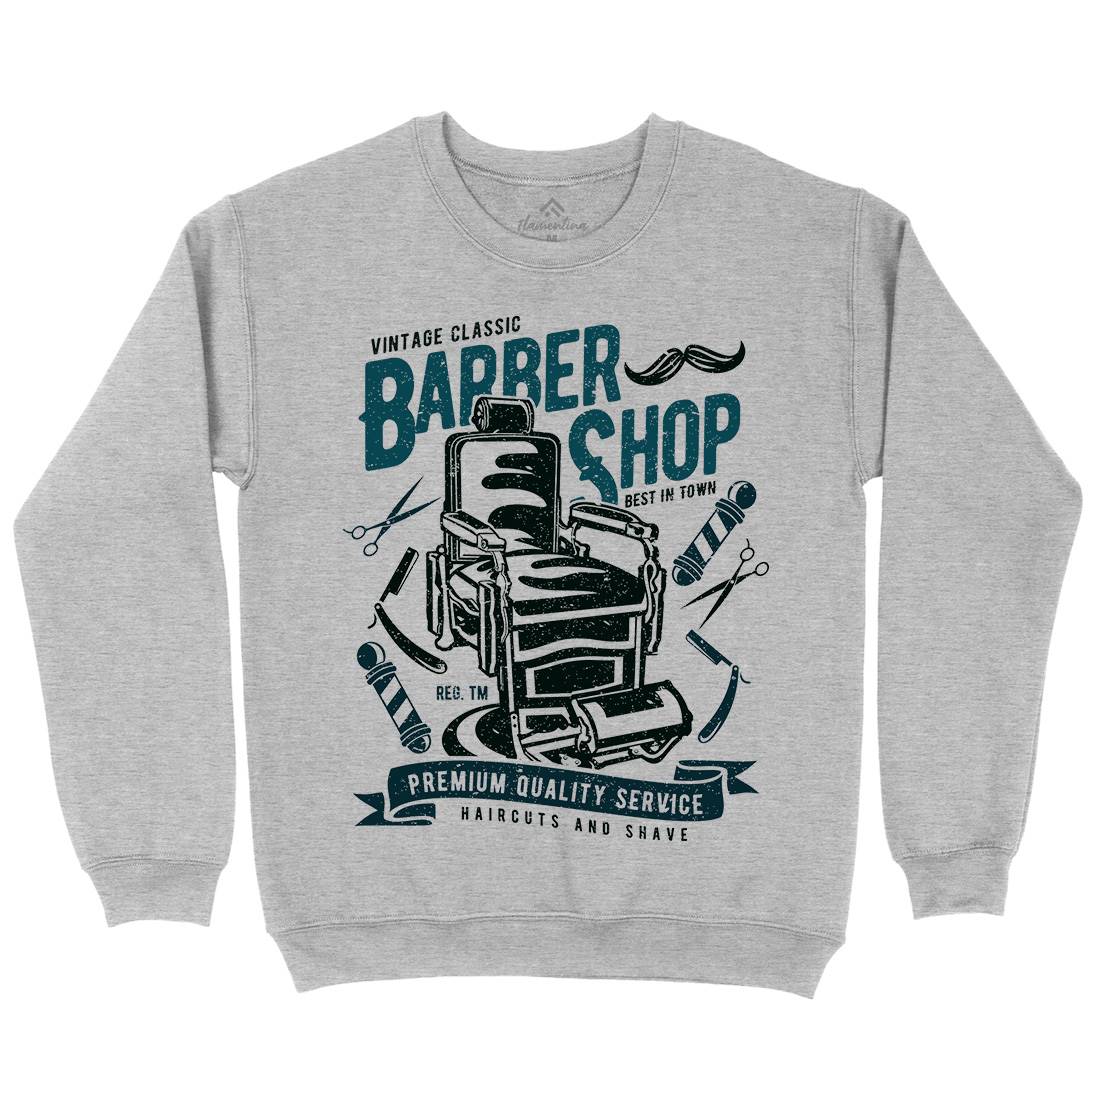 Vintage Shop Kids Crew Neck Sweatshirt Barber A191